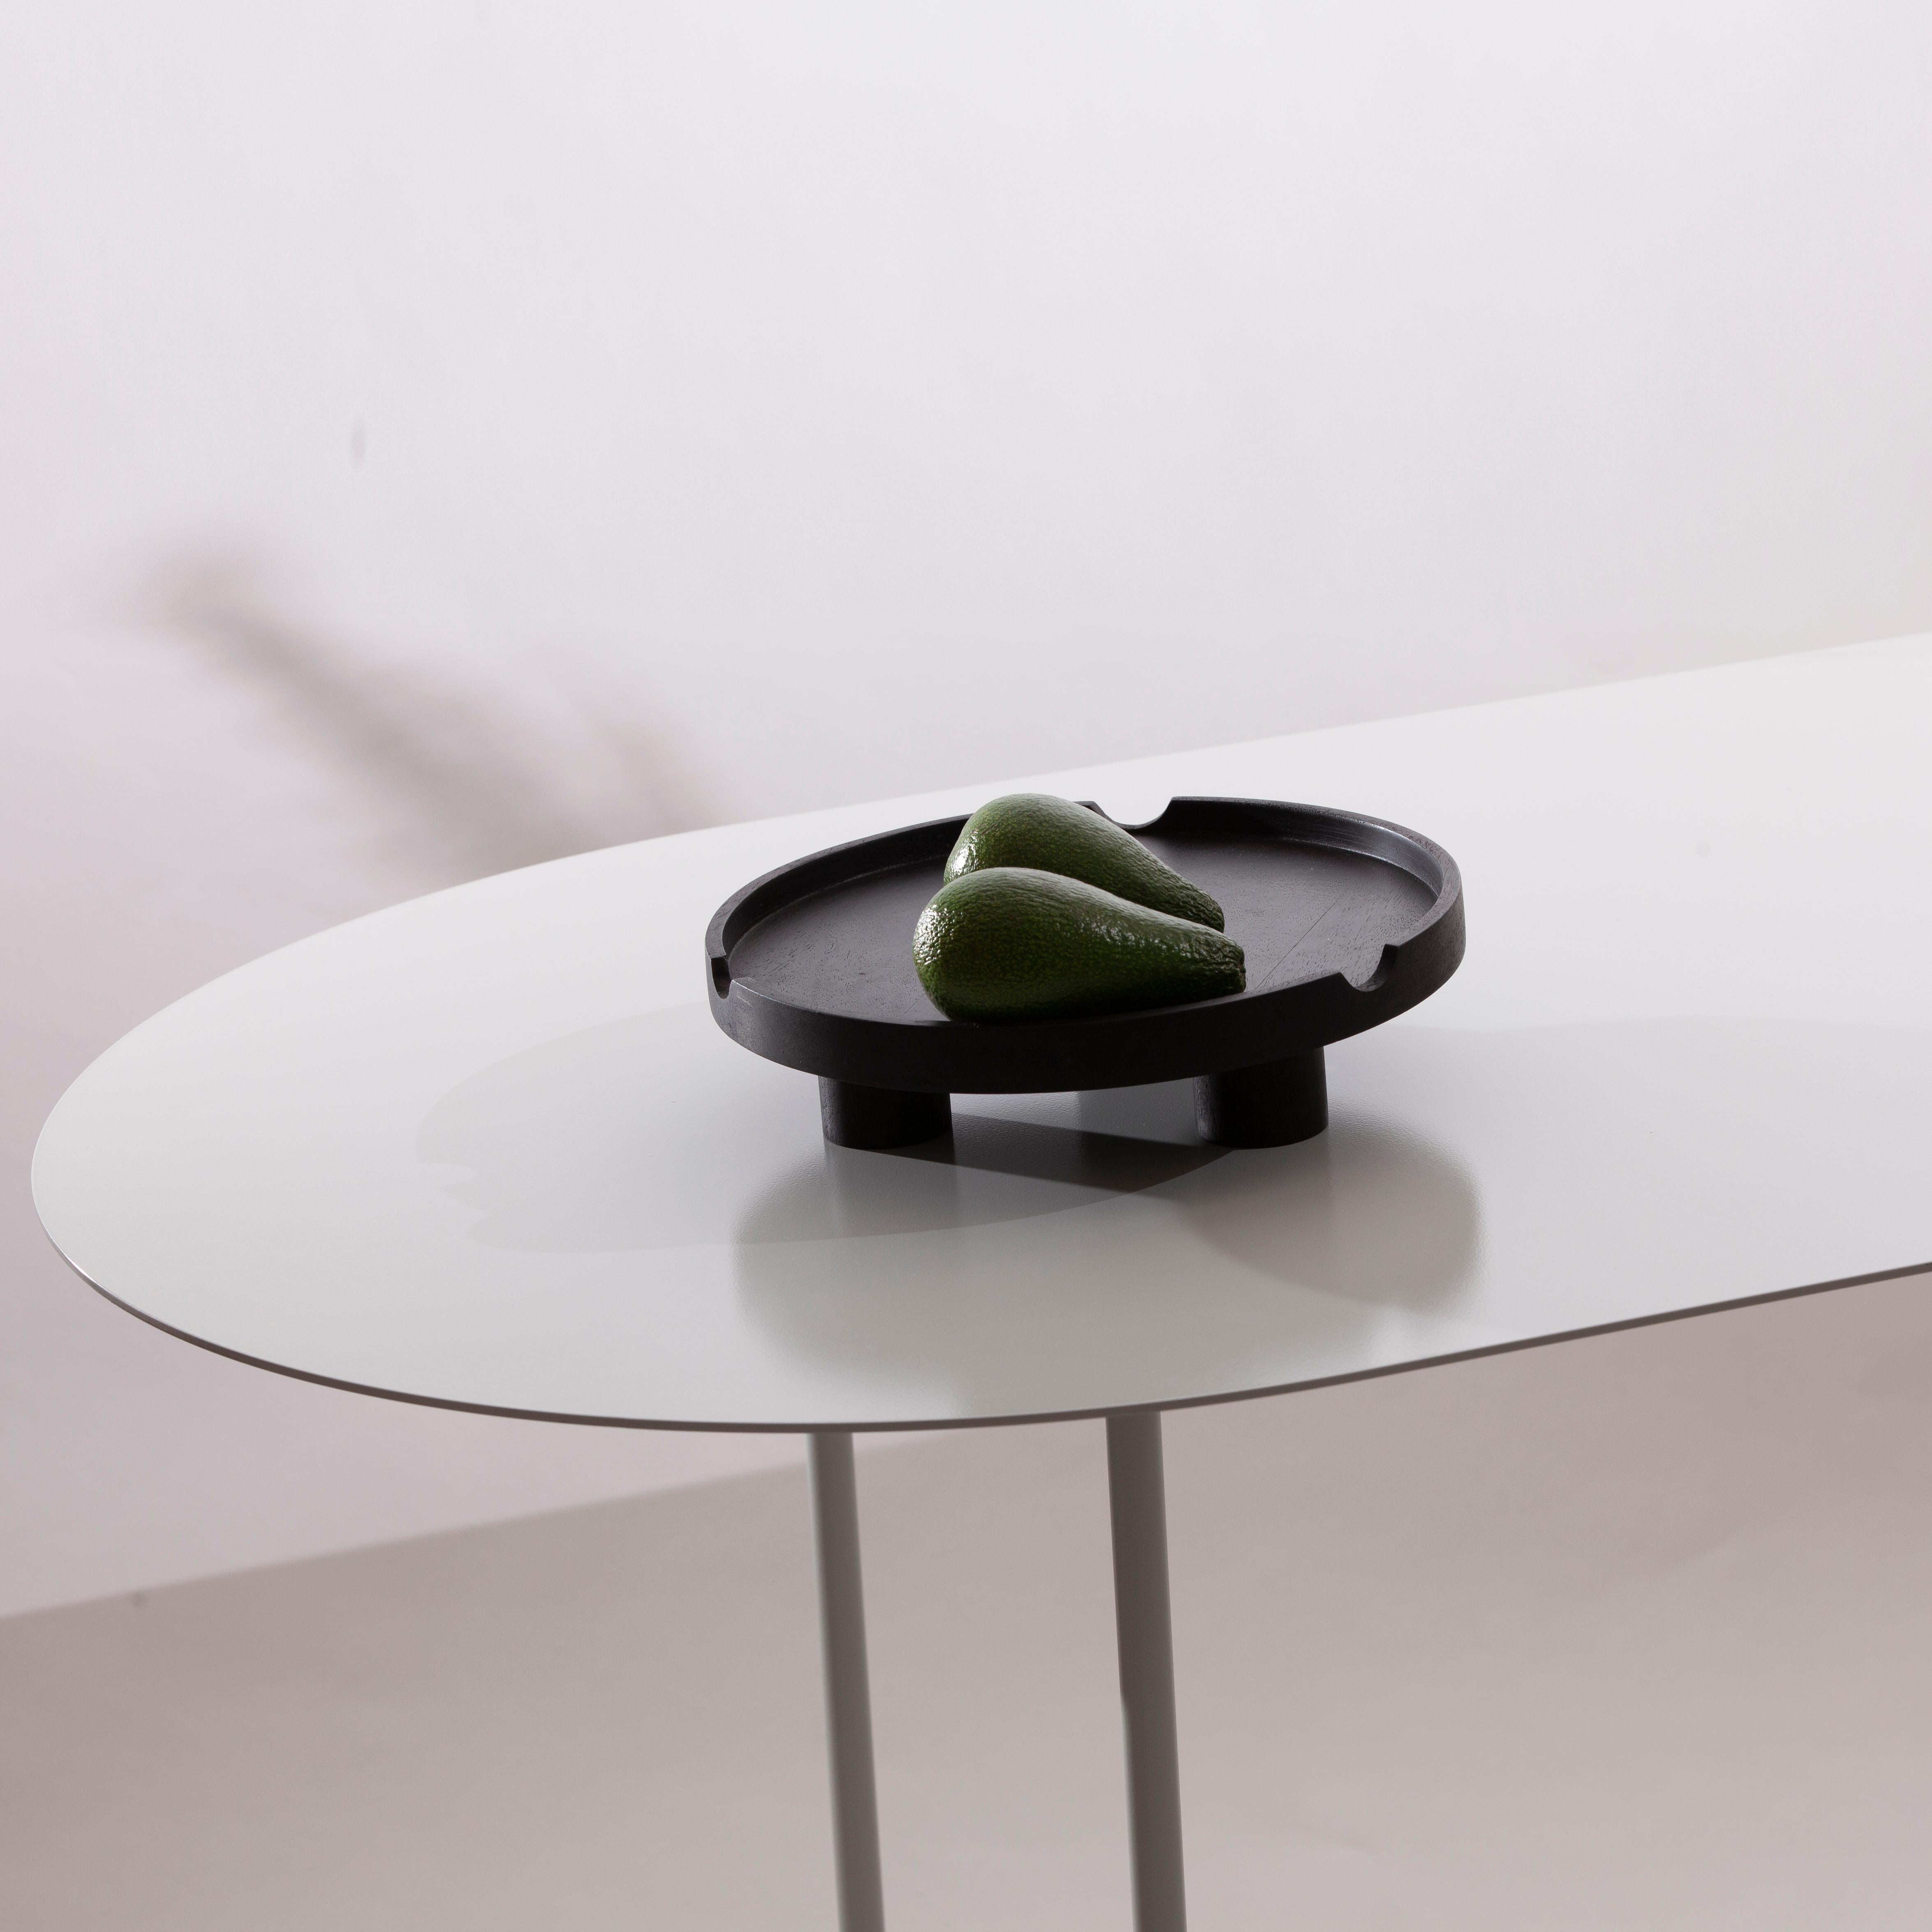 Italian Ultra modern minimalist dining room table studio table in white steel ultra slim For Sale